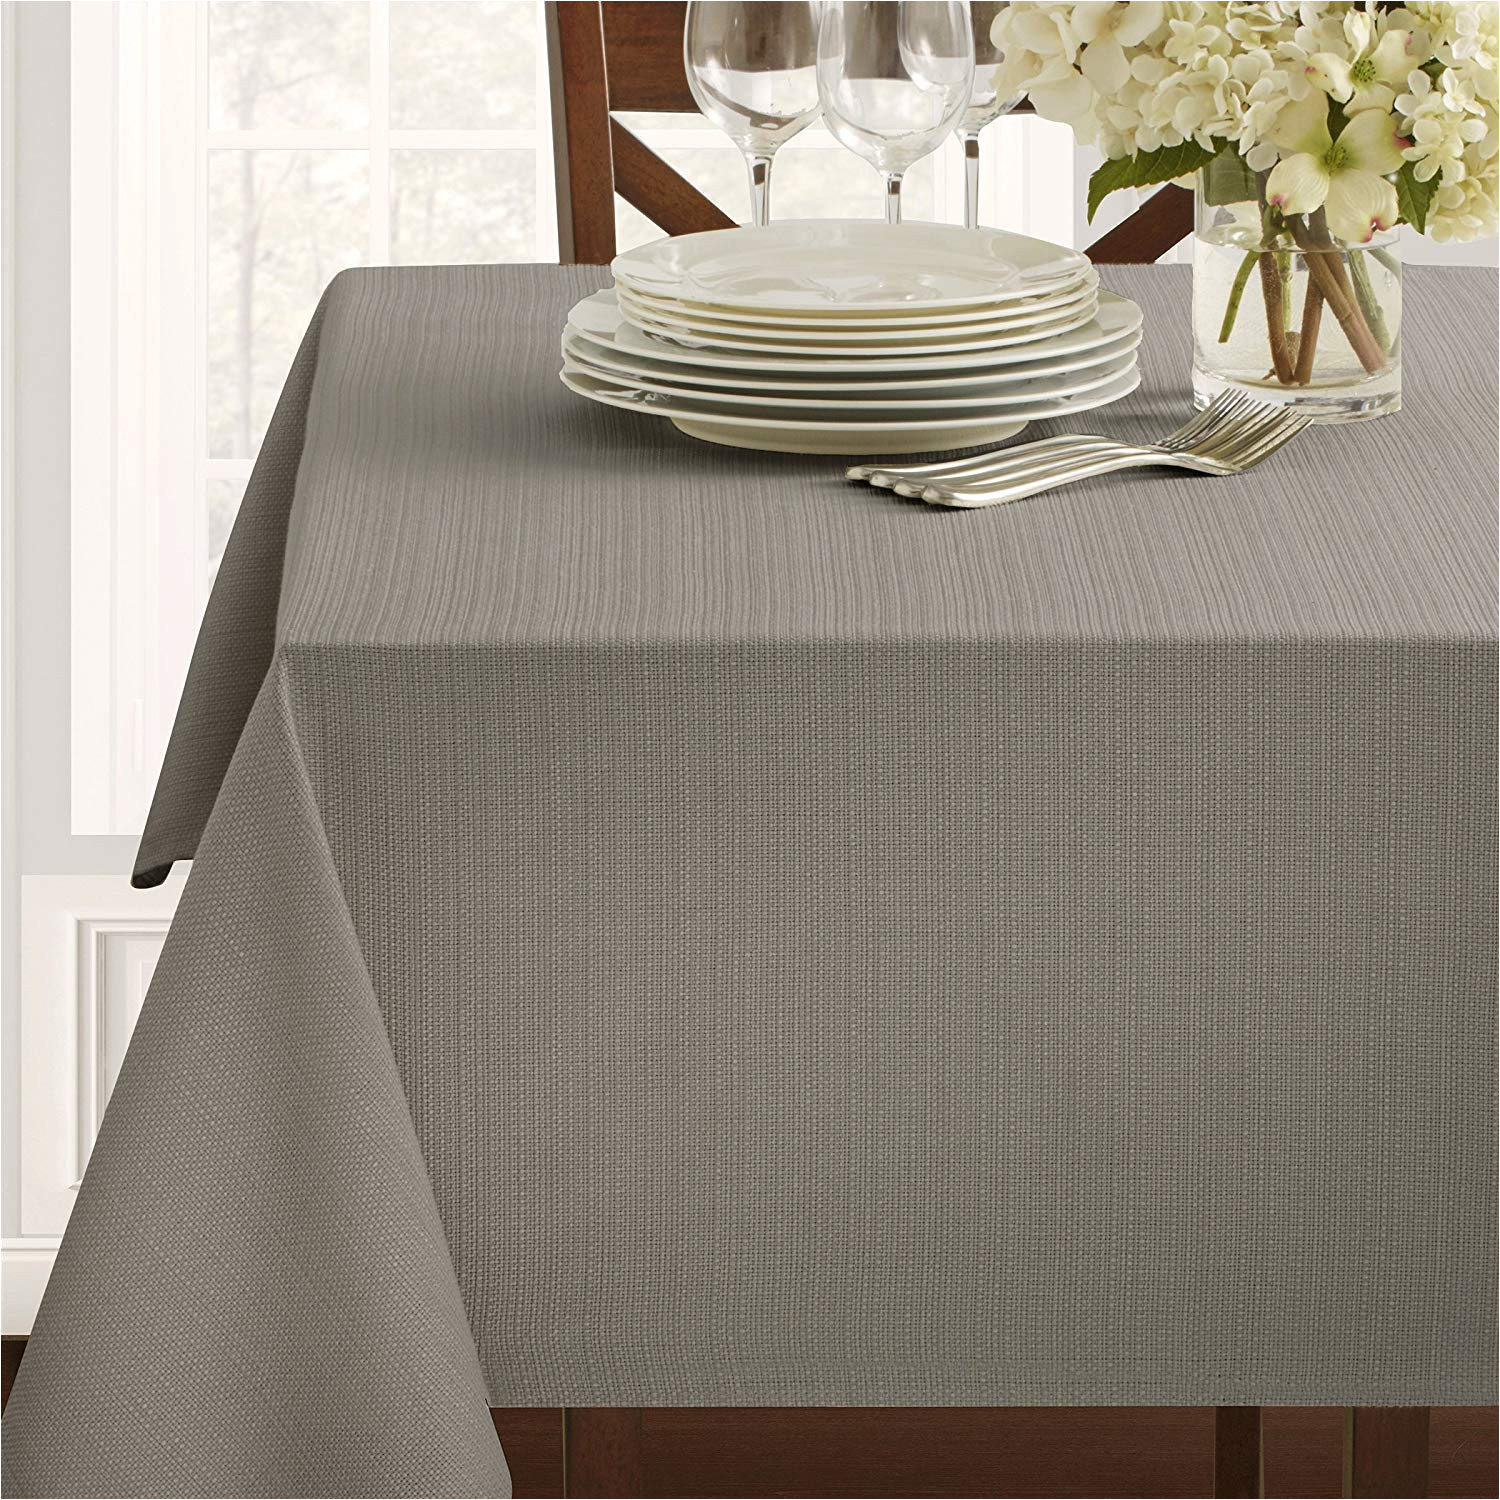 amazon com benson mills textured fabric tablecloth 60 x 84 rectangular grey home kitchen